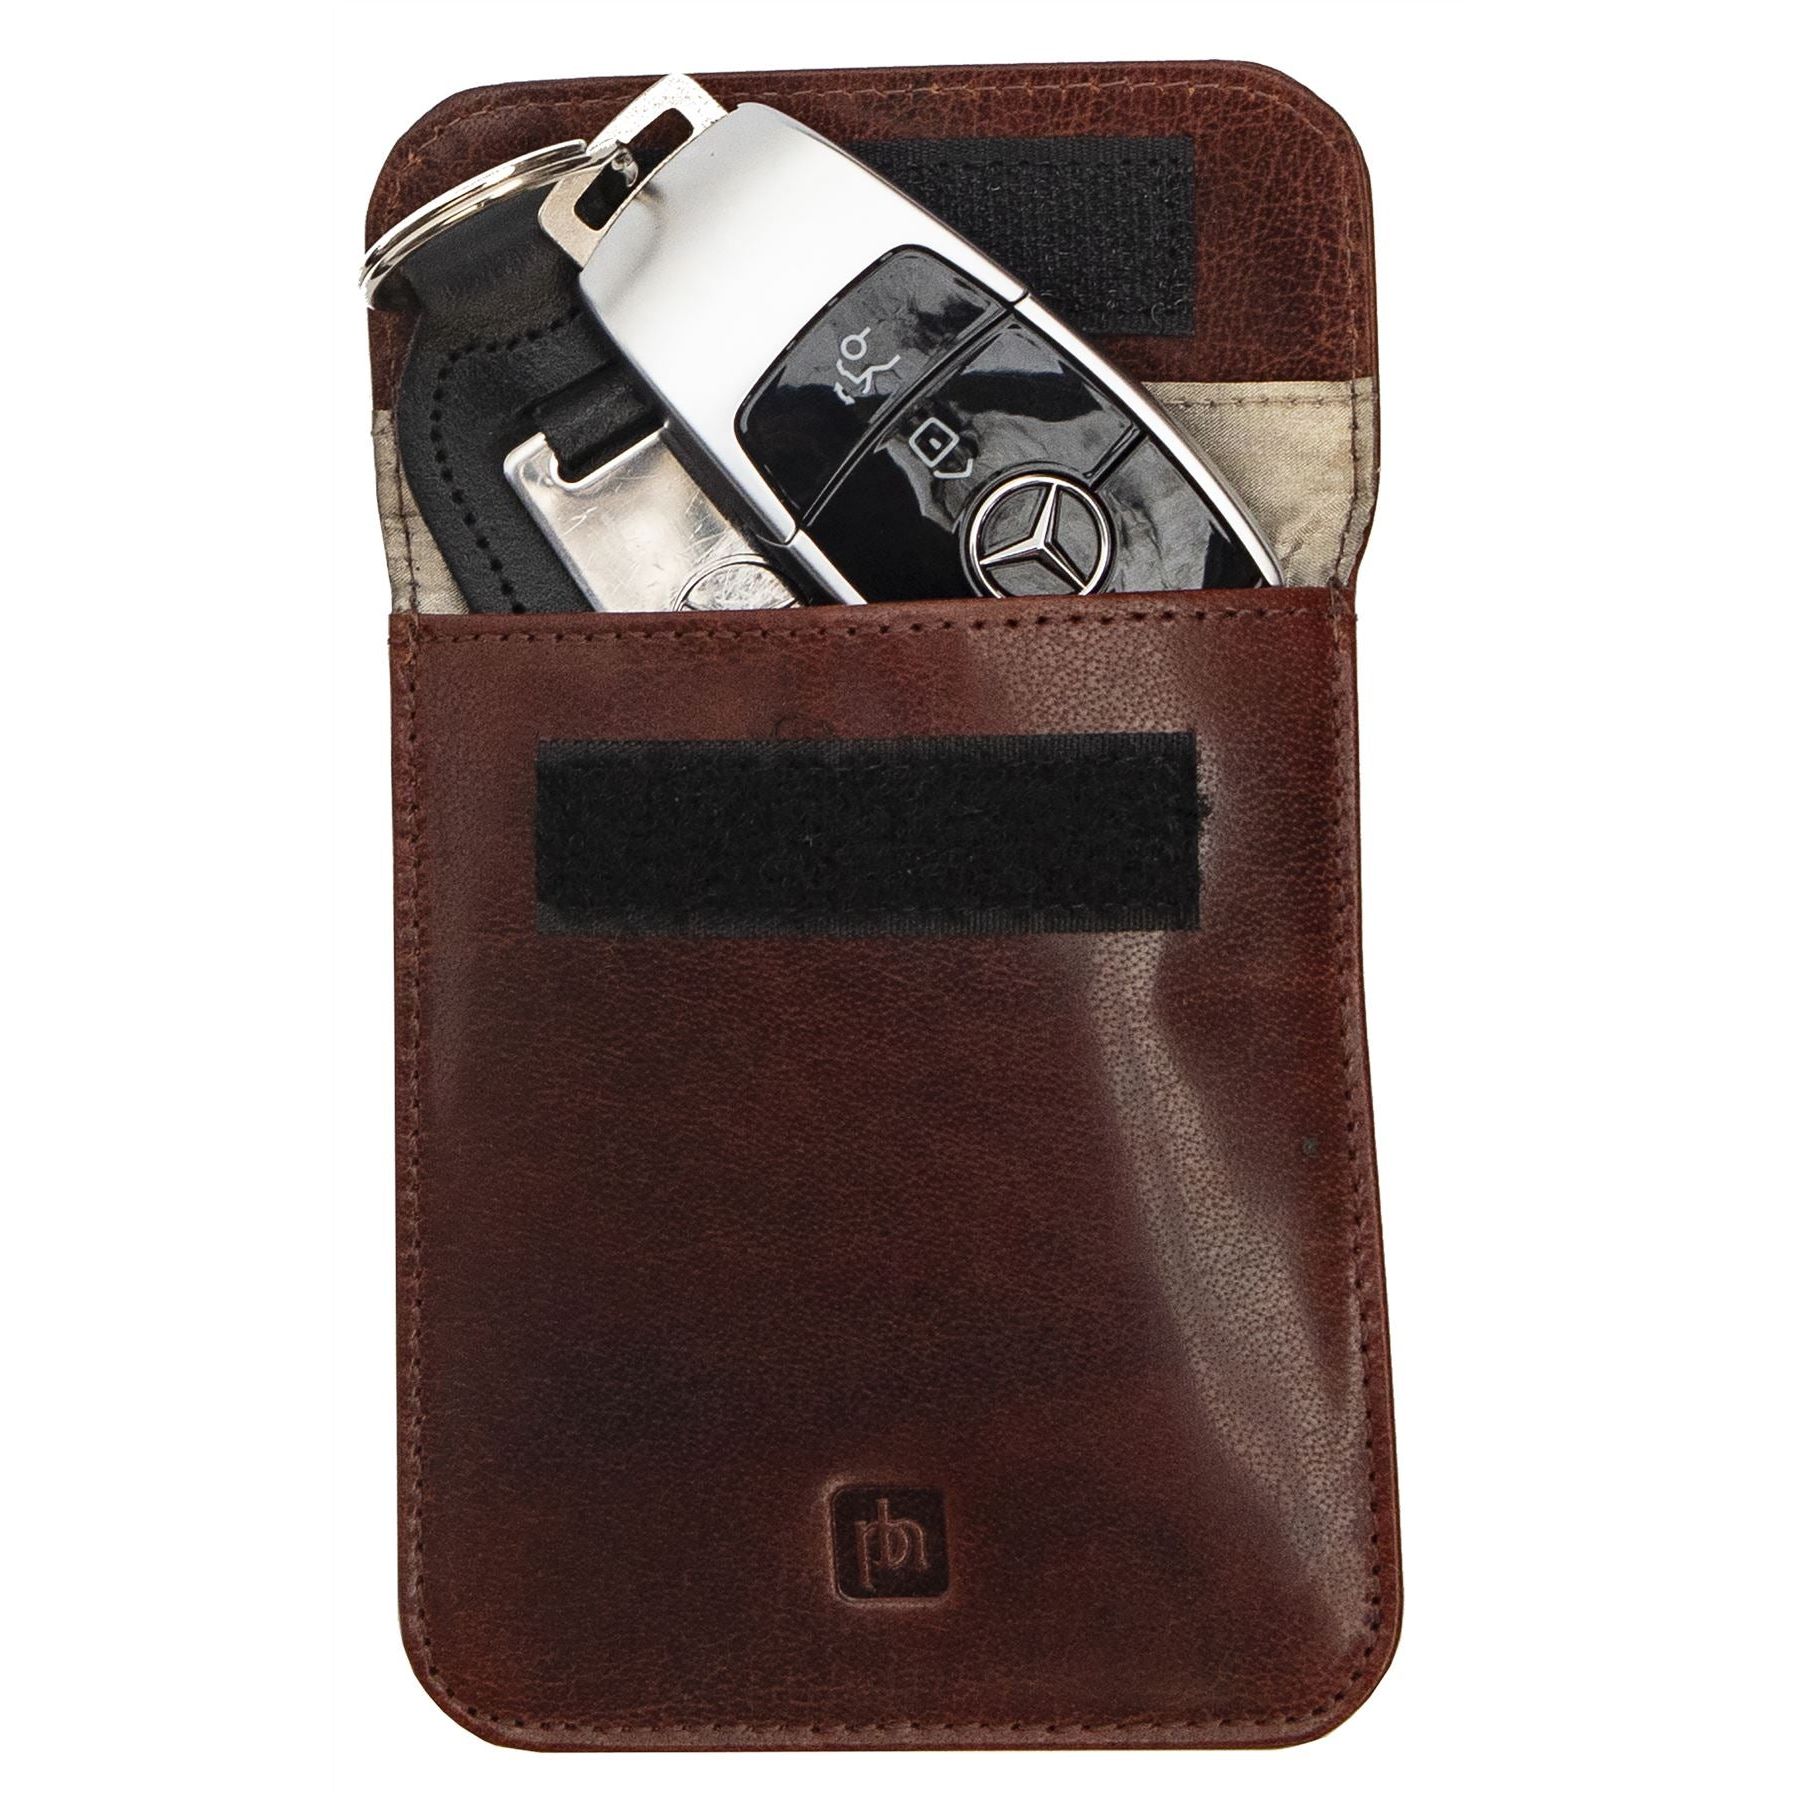 Leather Key Pouch - 4829 | Go Wholesale